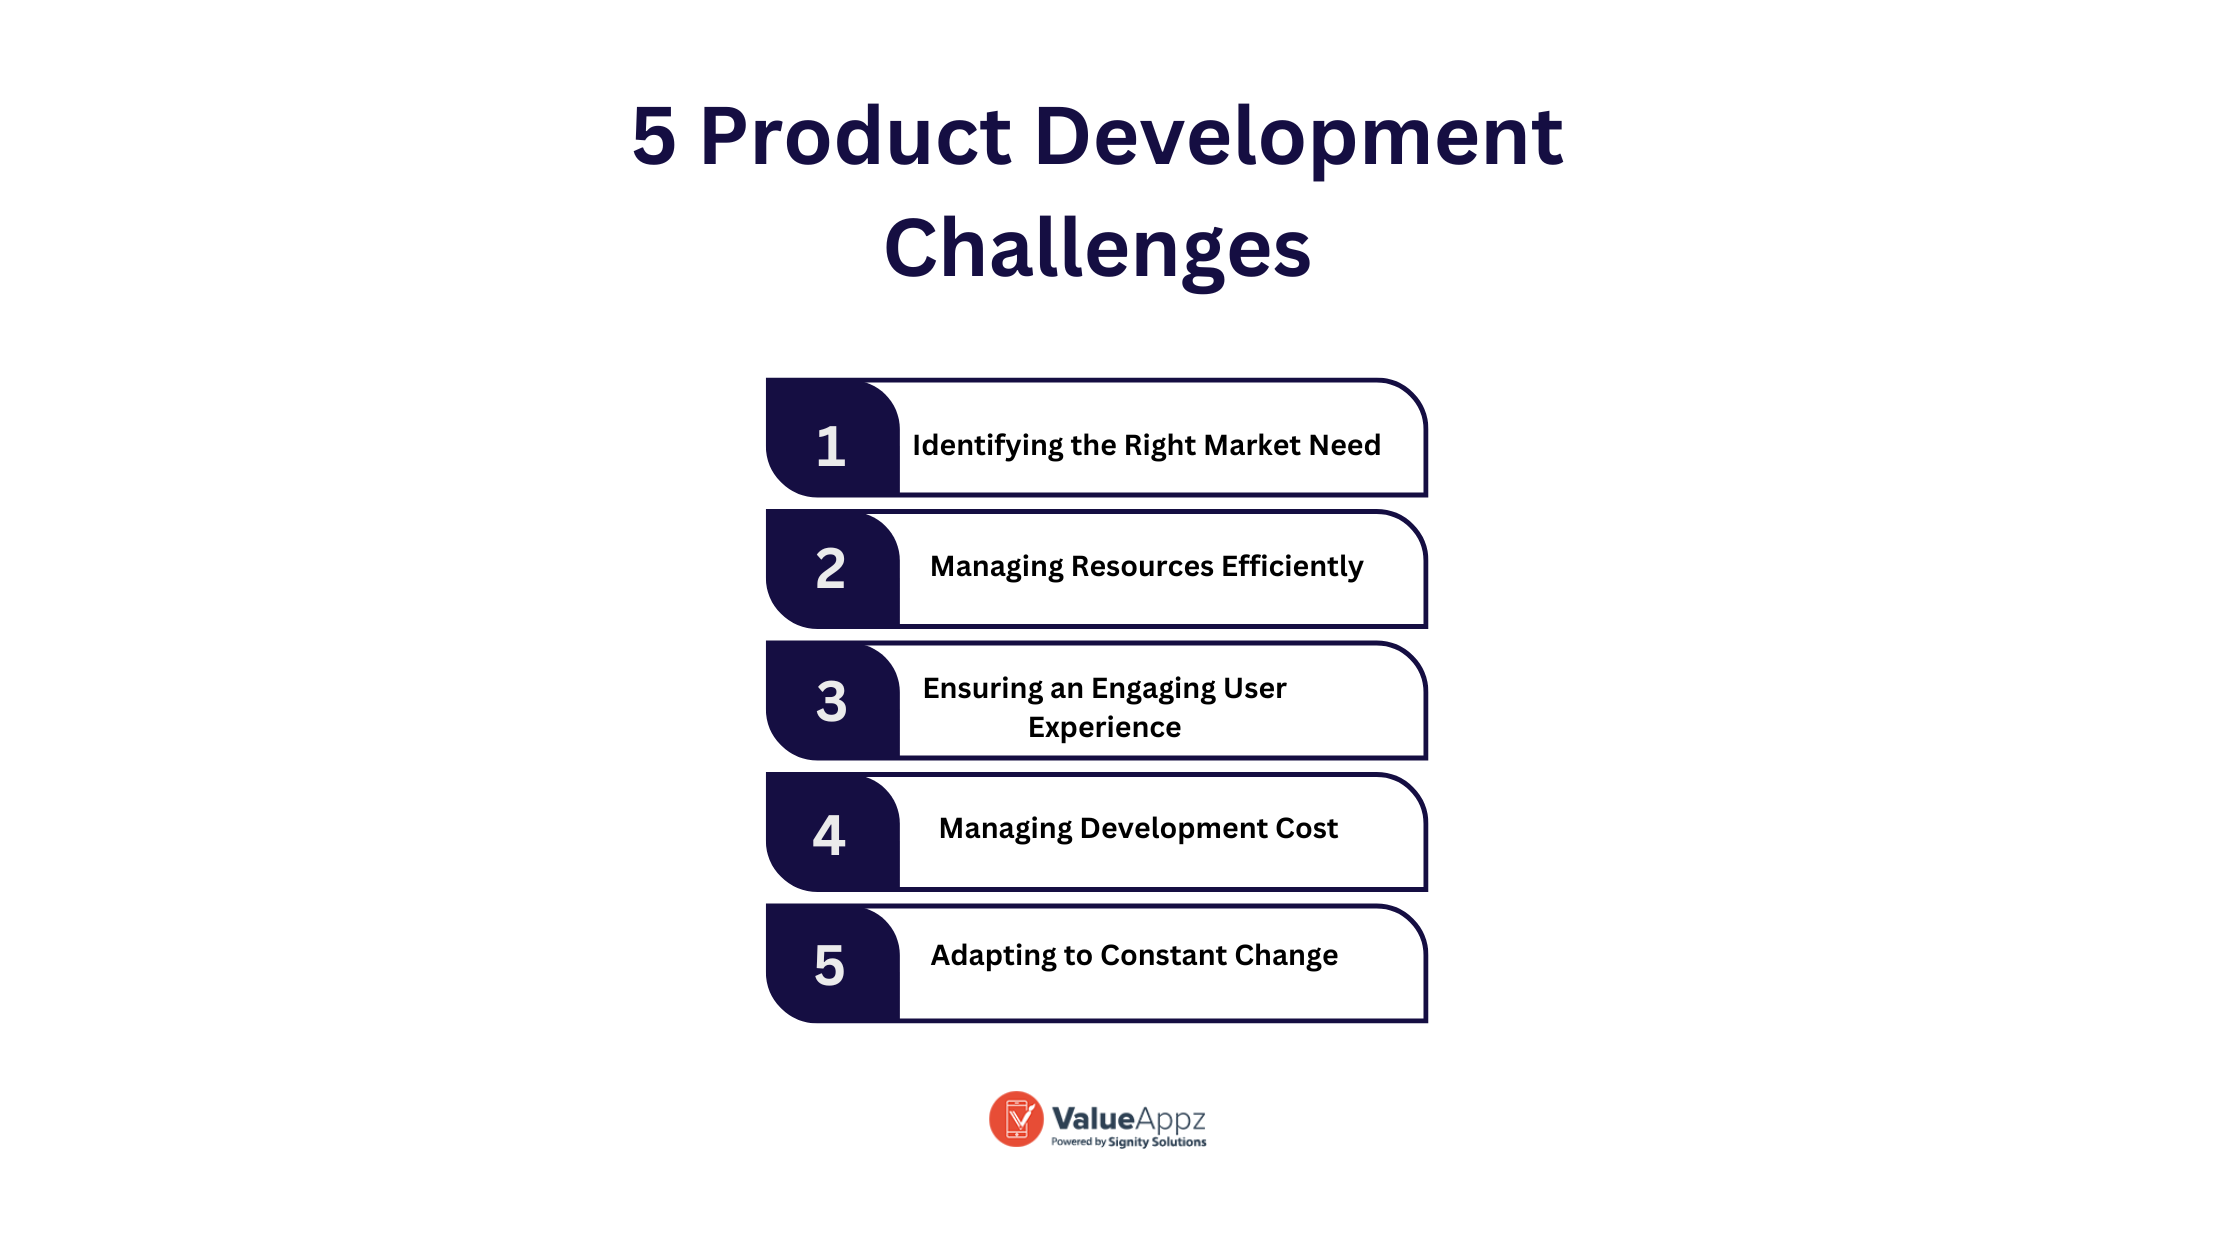 5 Common Product Development Challenges